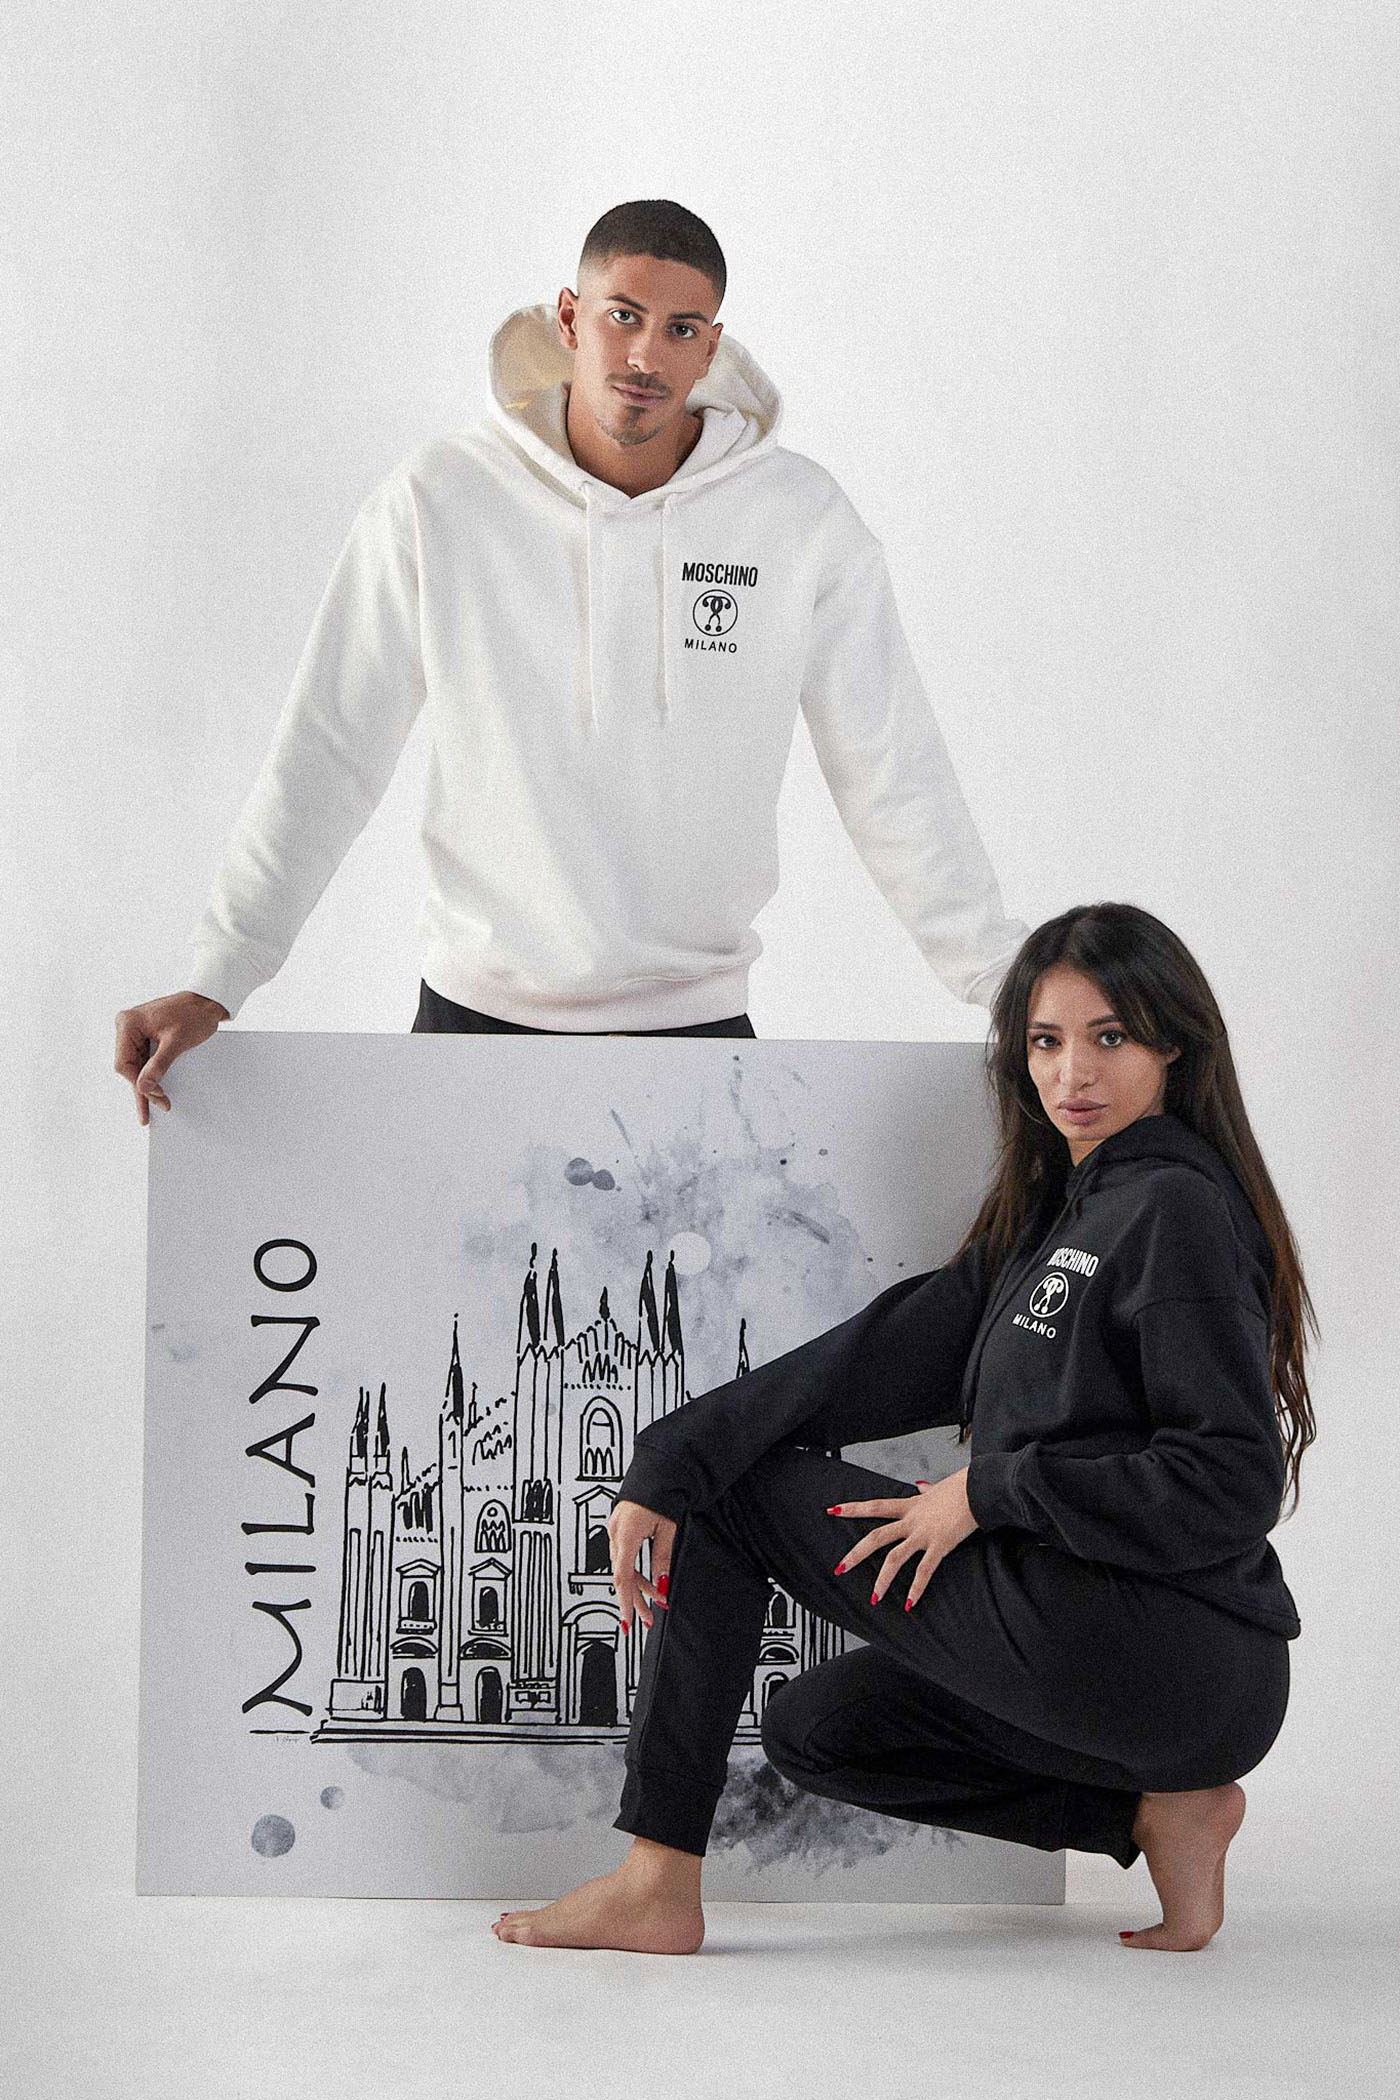 Maxi Collection high fashion distributor in Milan